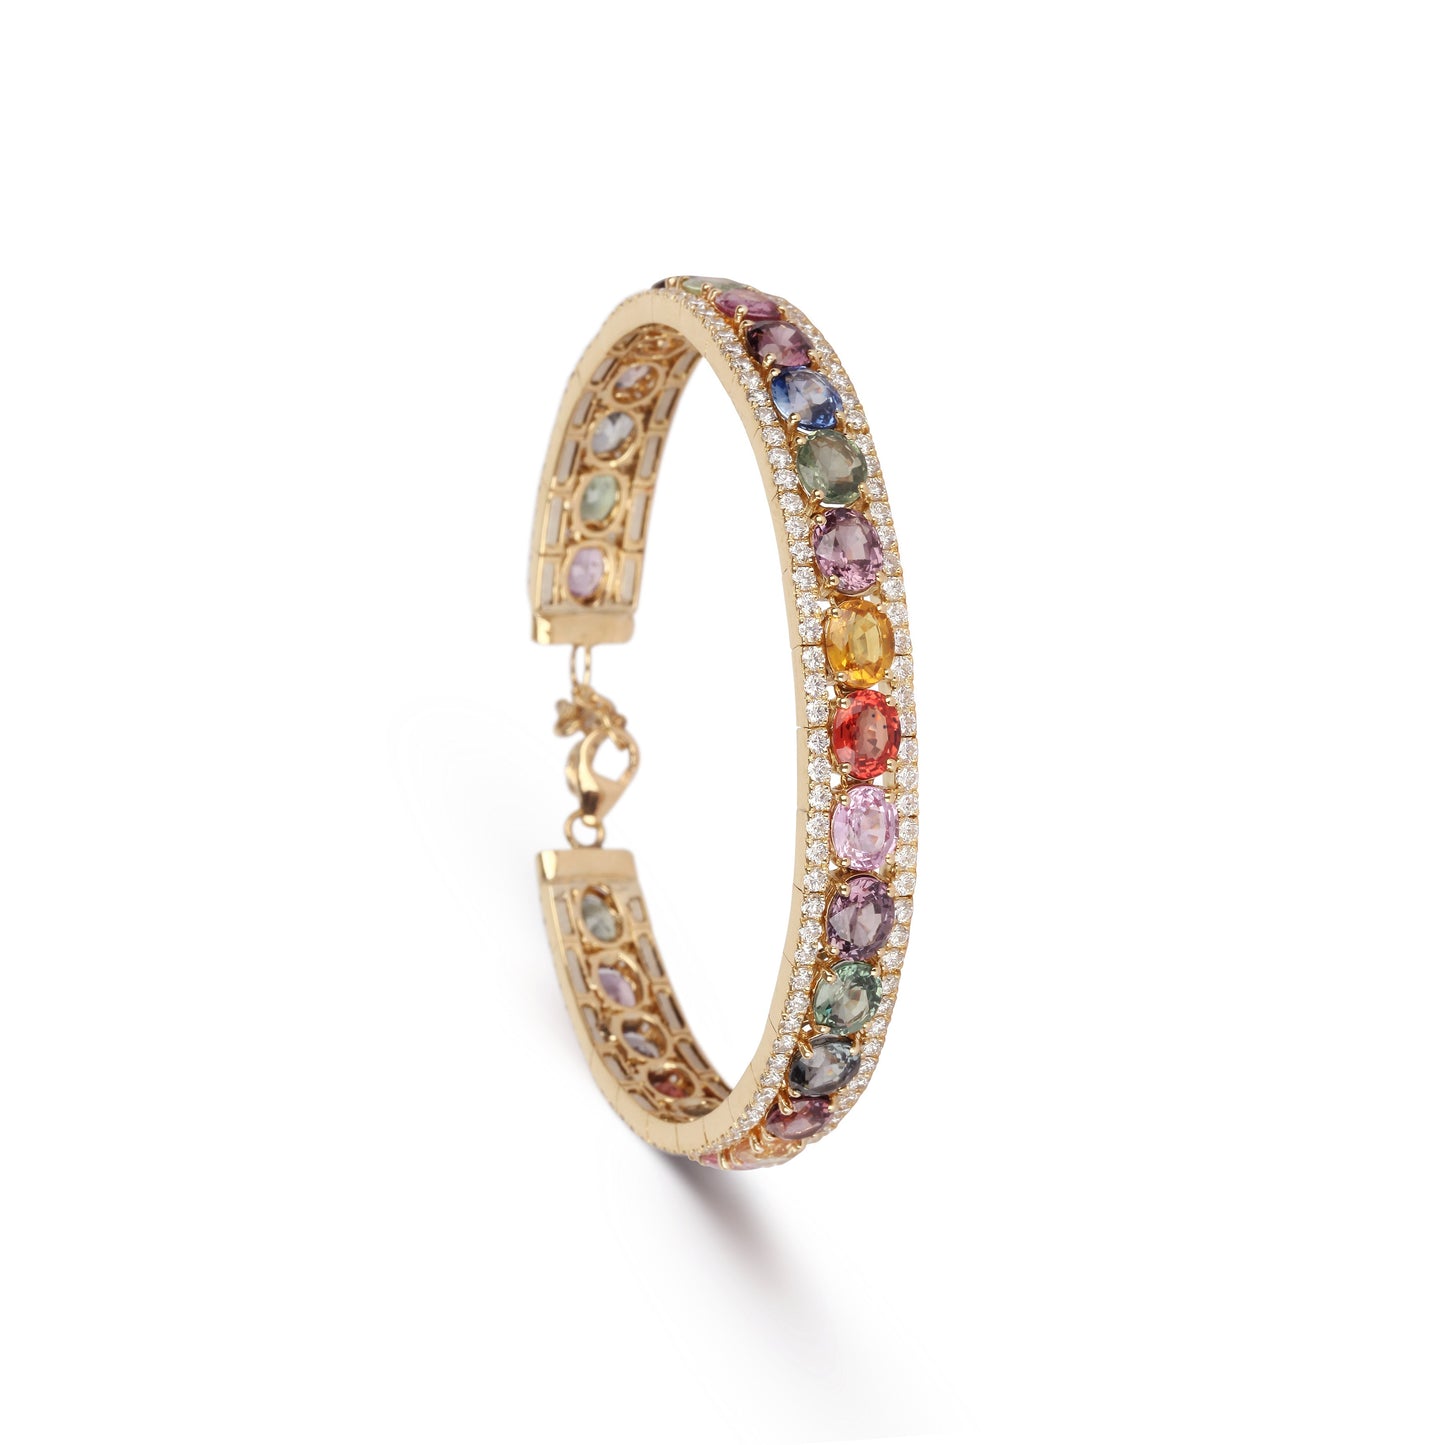 Colorful Sapphire & Diamonds Cuff Bracelet | jewellery store | diamond bracelet